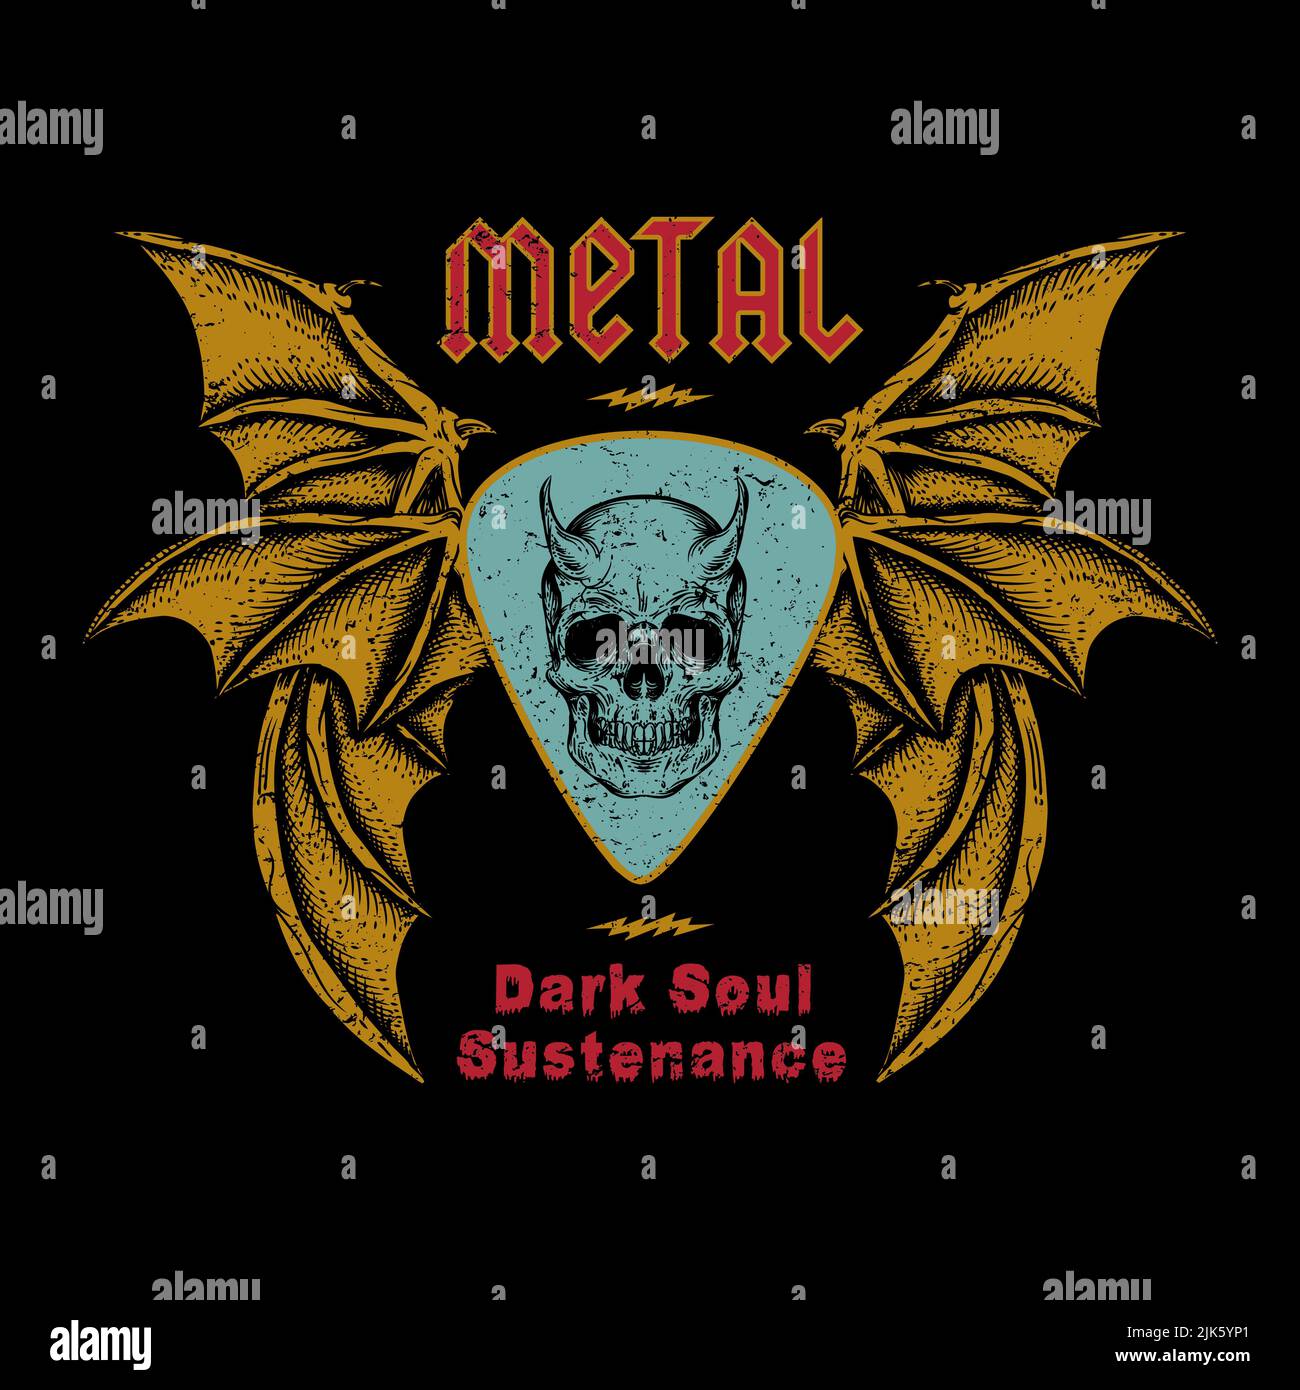 Metal - Dark Soul sustenance - Rock Music Graphic Foto Stock